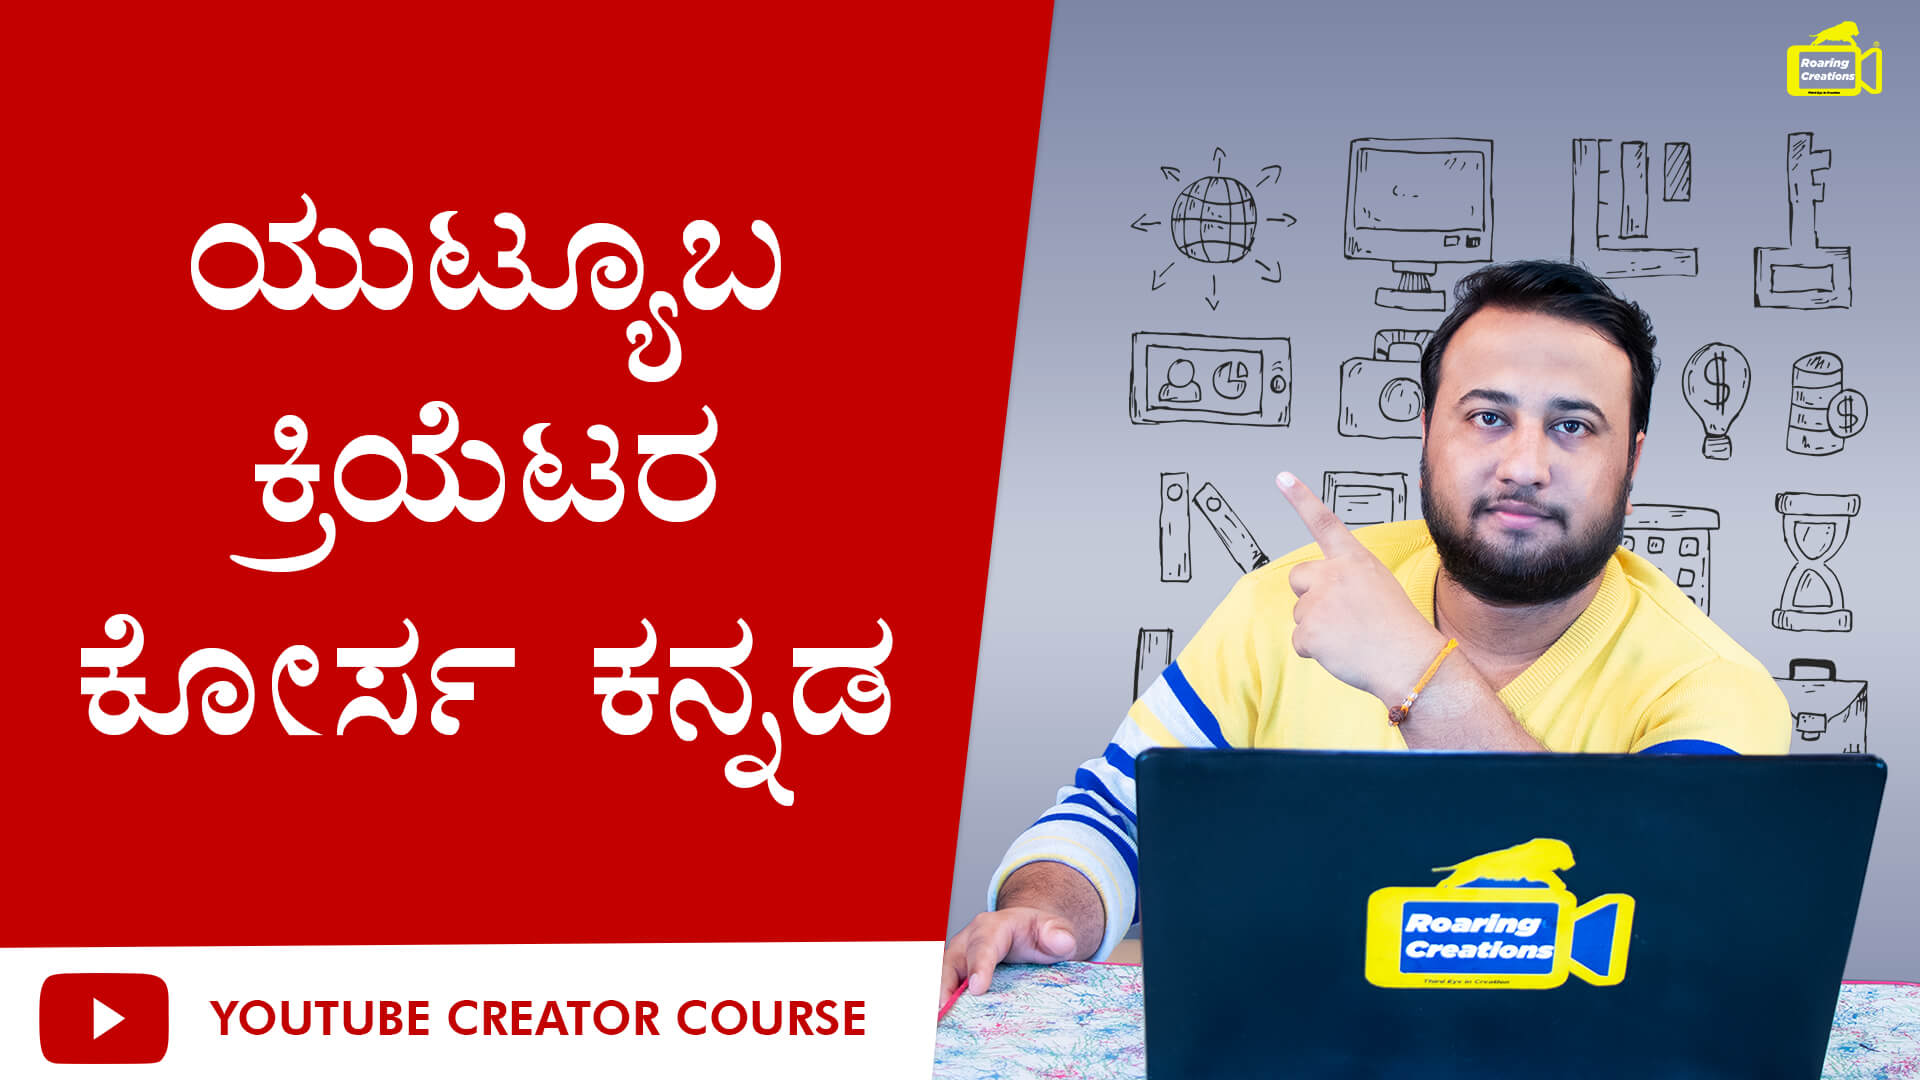 YouTube Creator Course Kannada